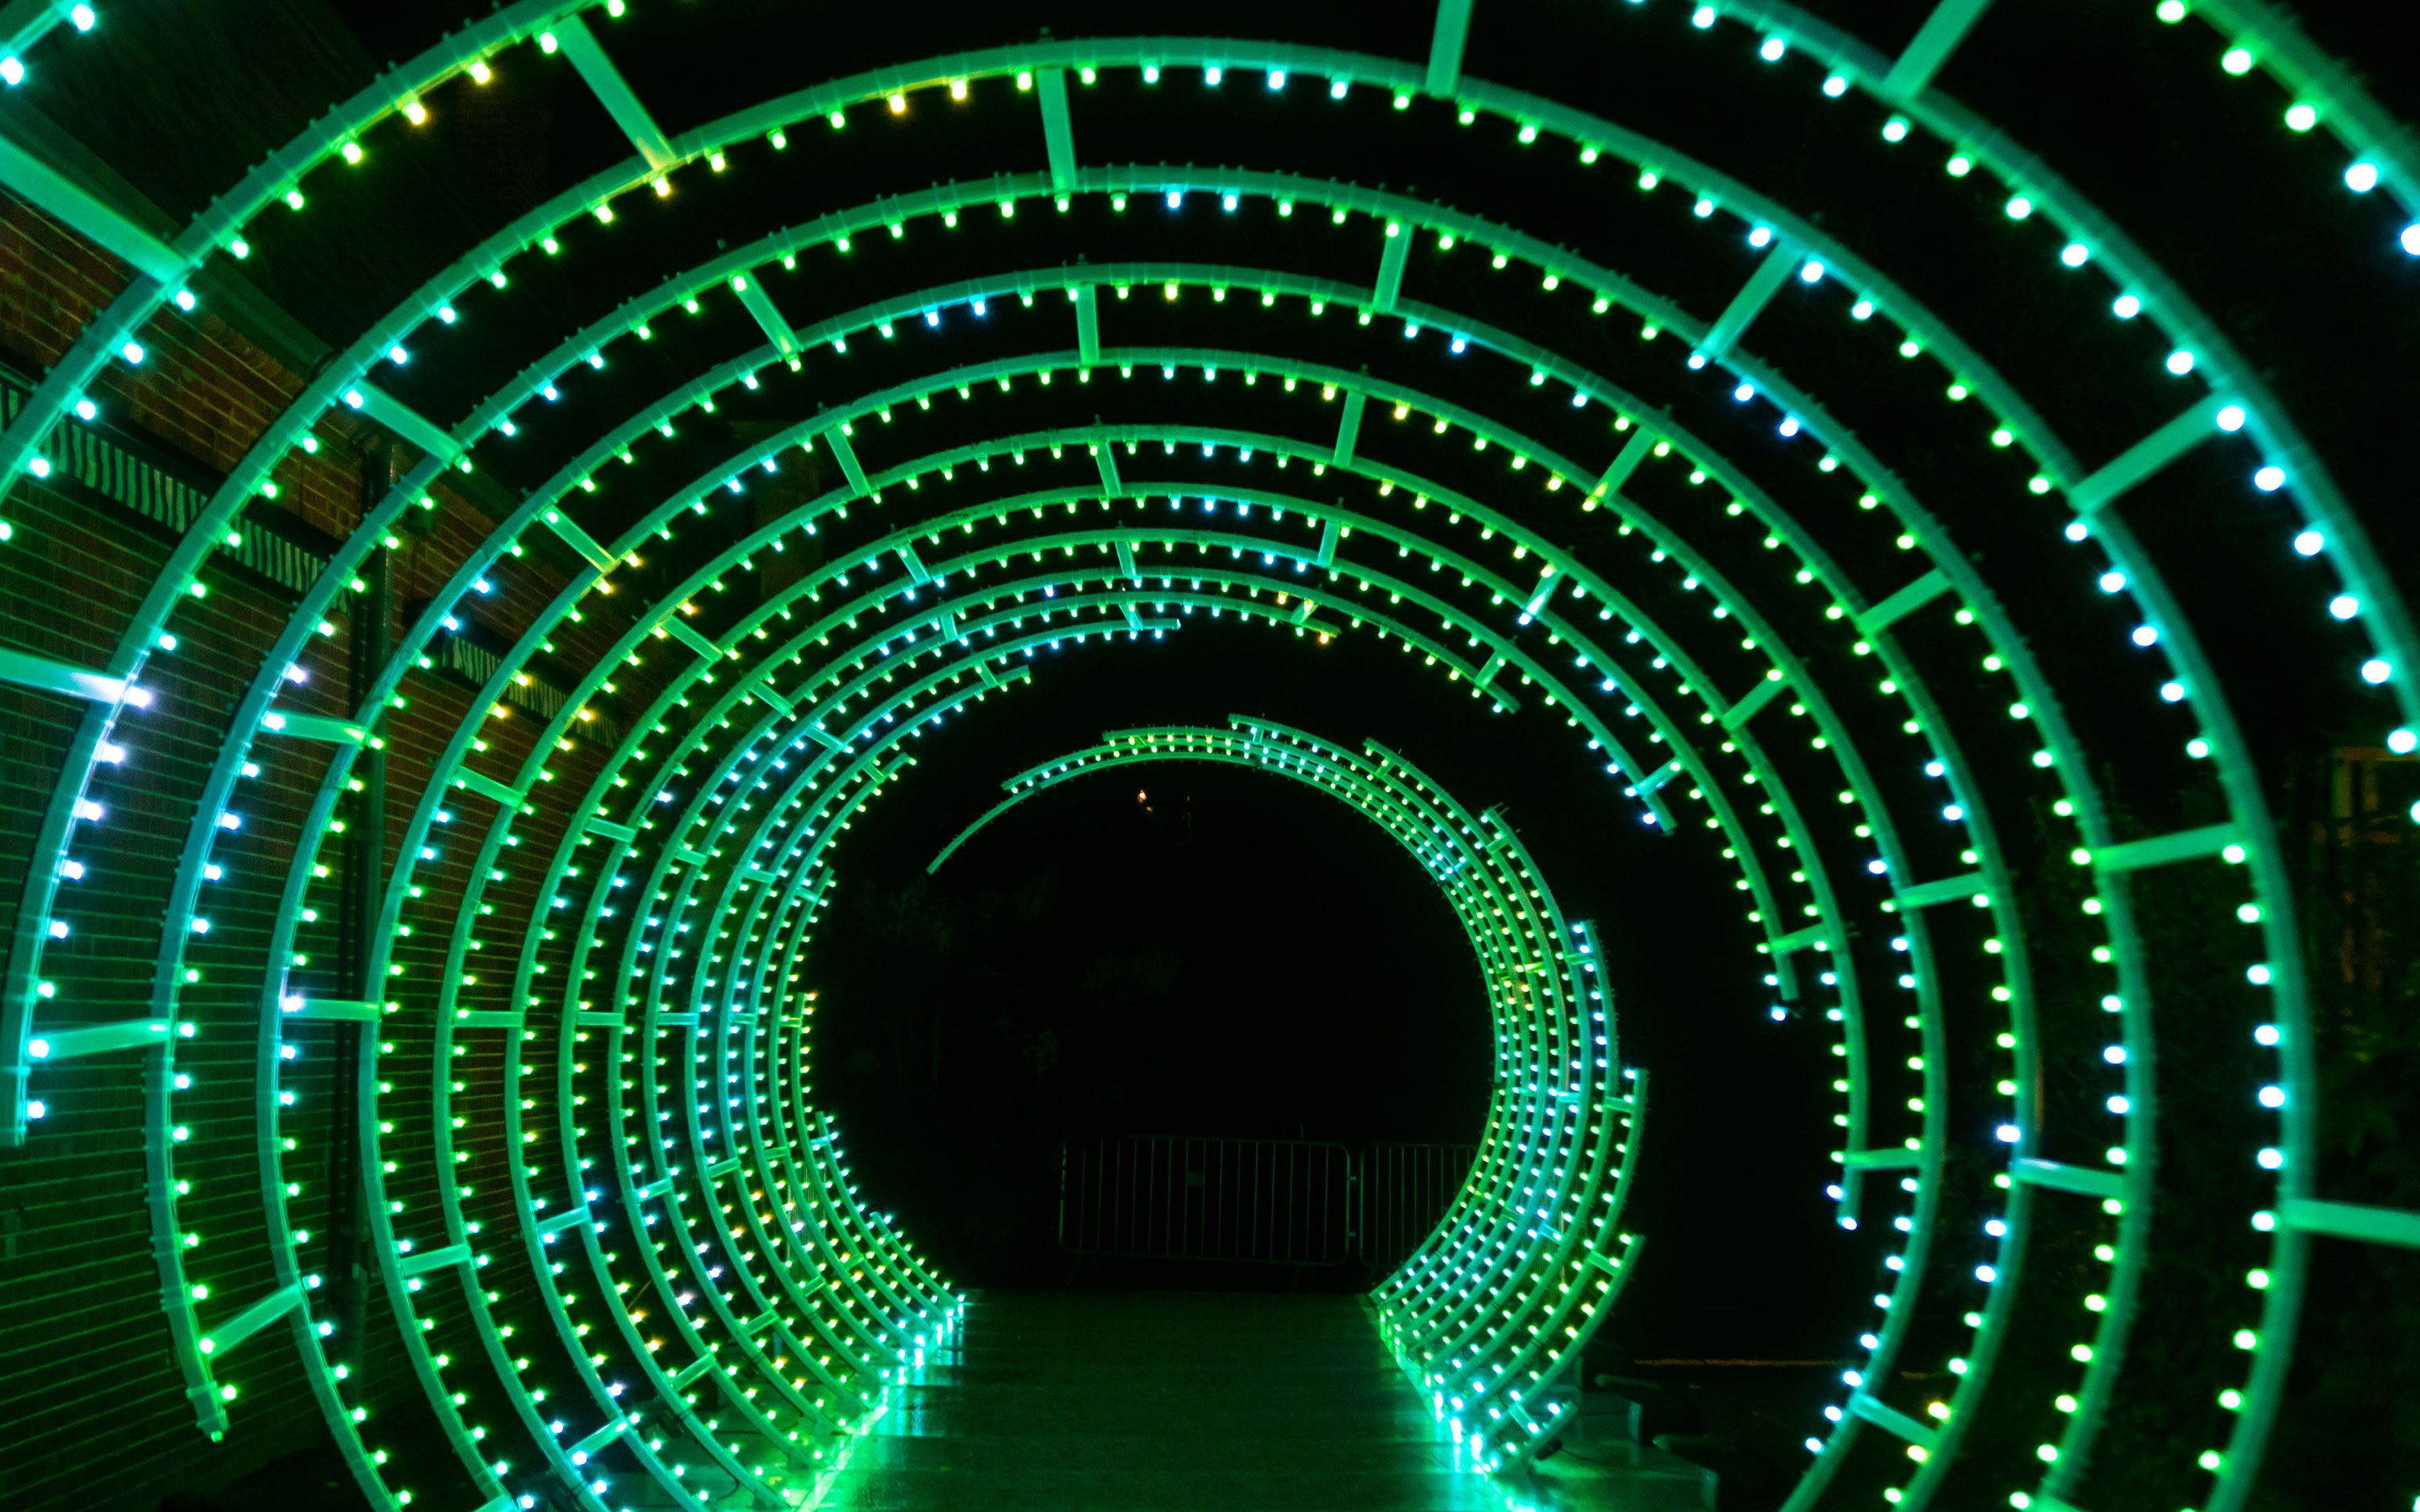 Tunnel of light christmas carnival